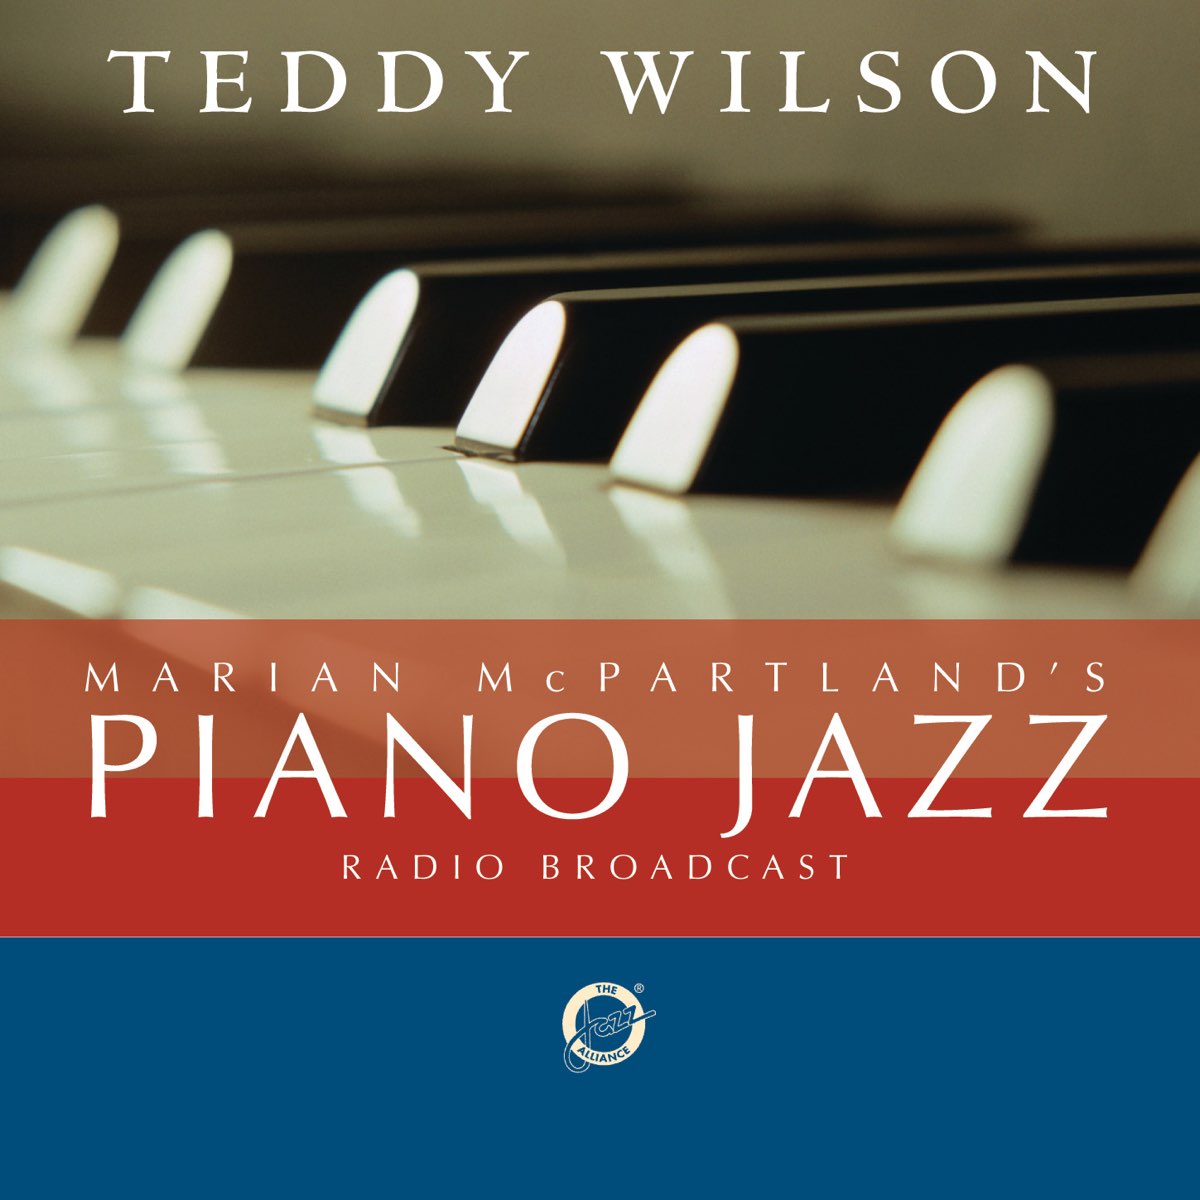 Marian McPartland's Piano Jazz Radio Broadcast (With Teddy Wilson) by  Marian McPartland & Teddy Wilson on Apple Music